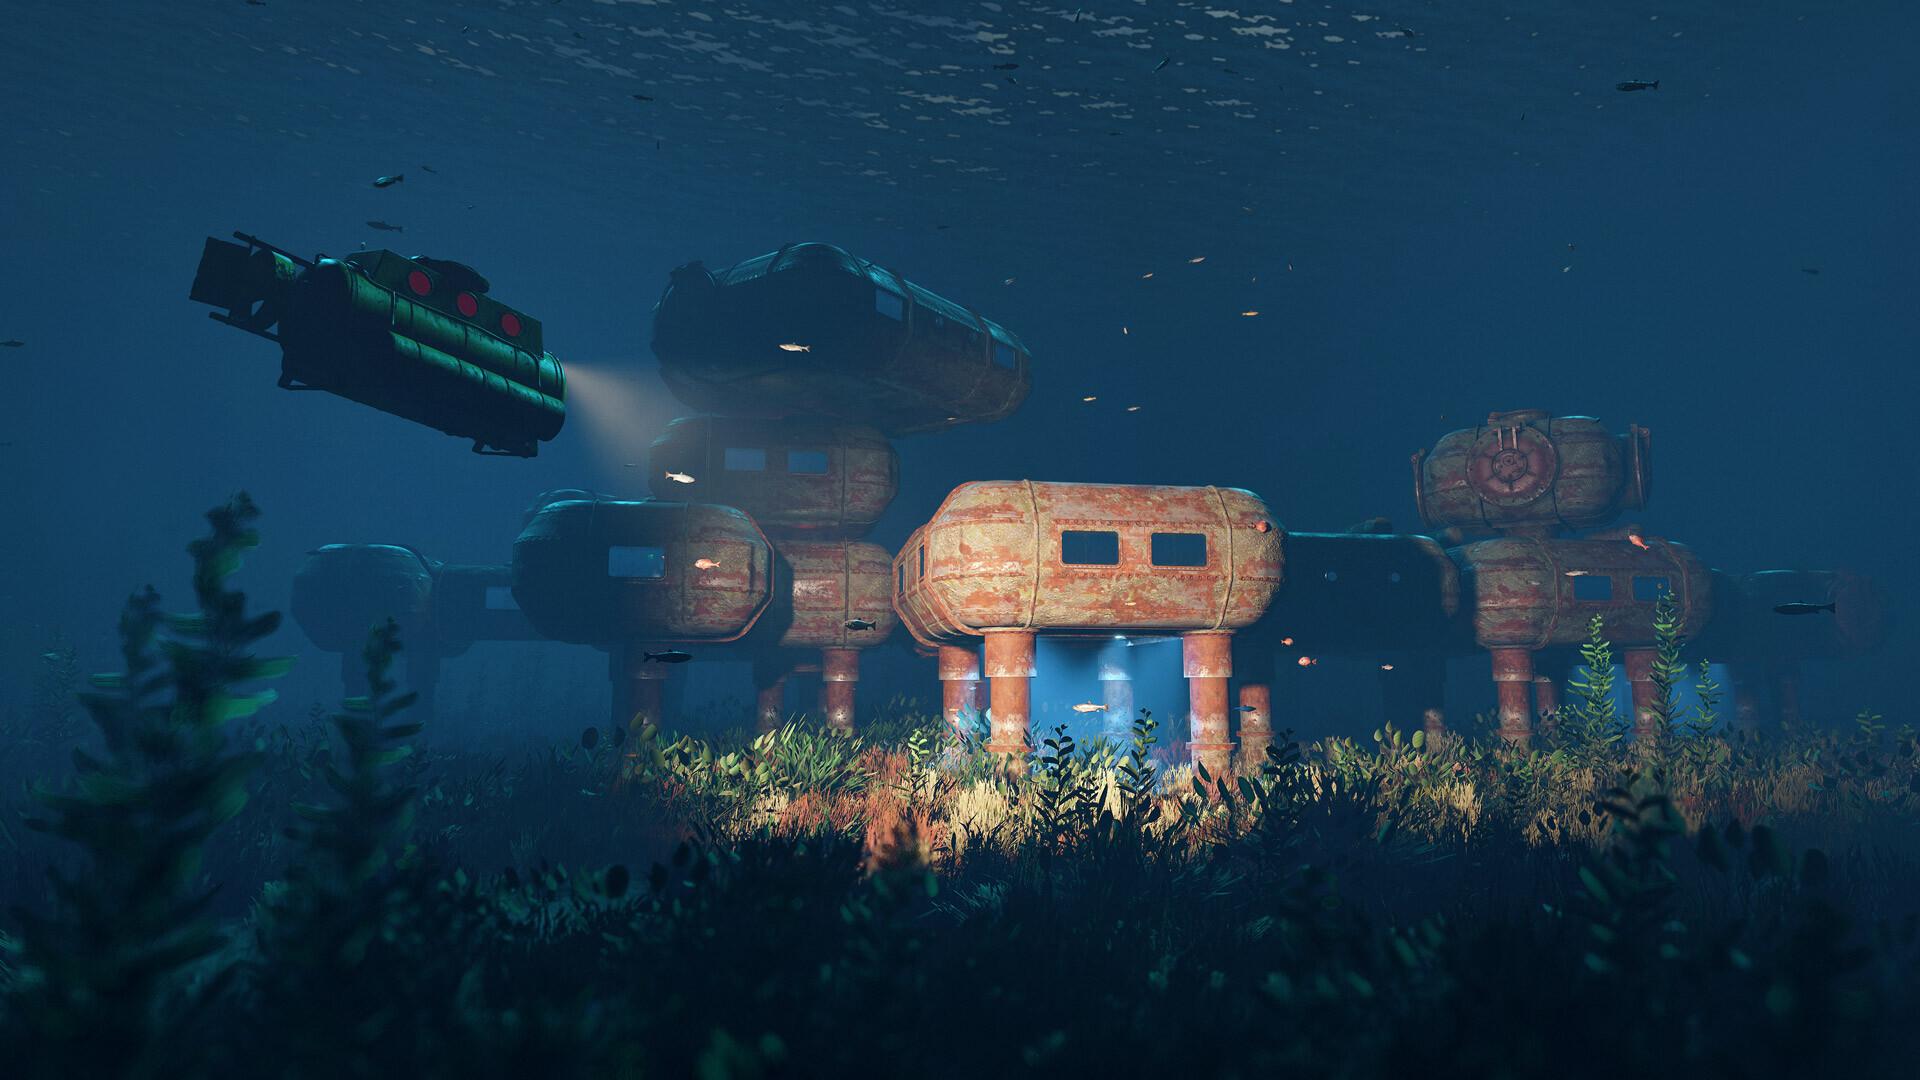 Screenshot №16 from game Rust